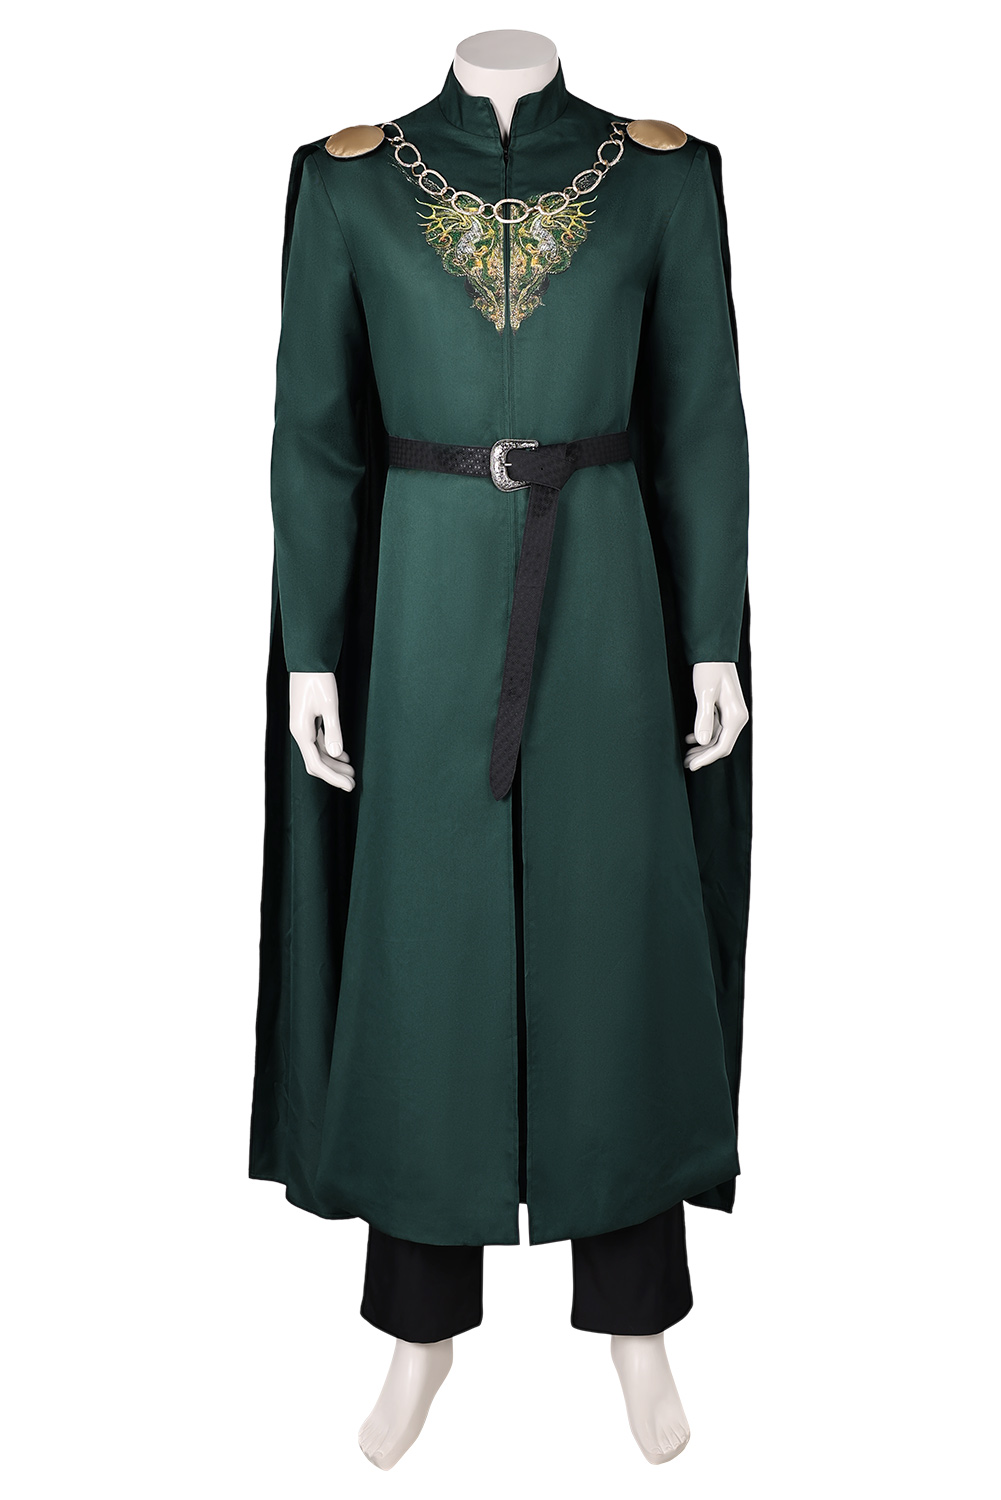 TV House of the Dragon Season 2 King Aegon Targaryen Outfits Halloween Carnival Suit Cosplay Costume